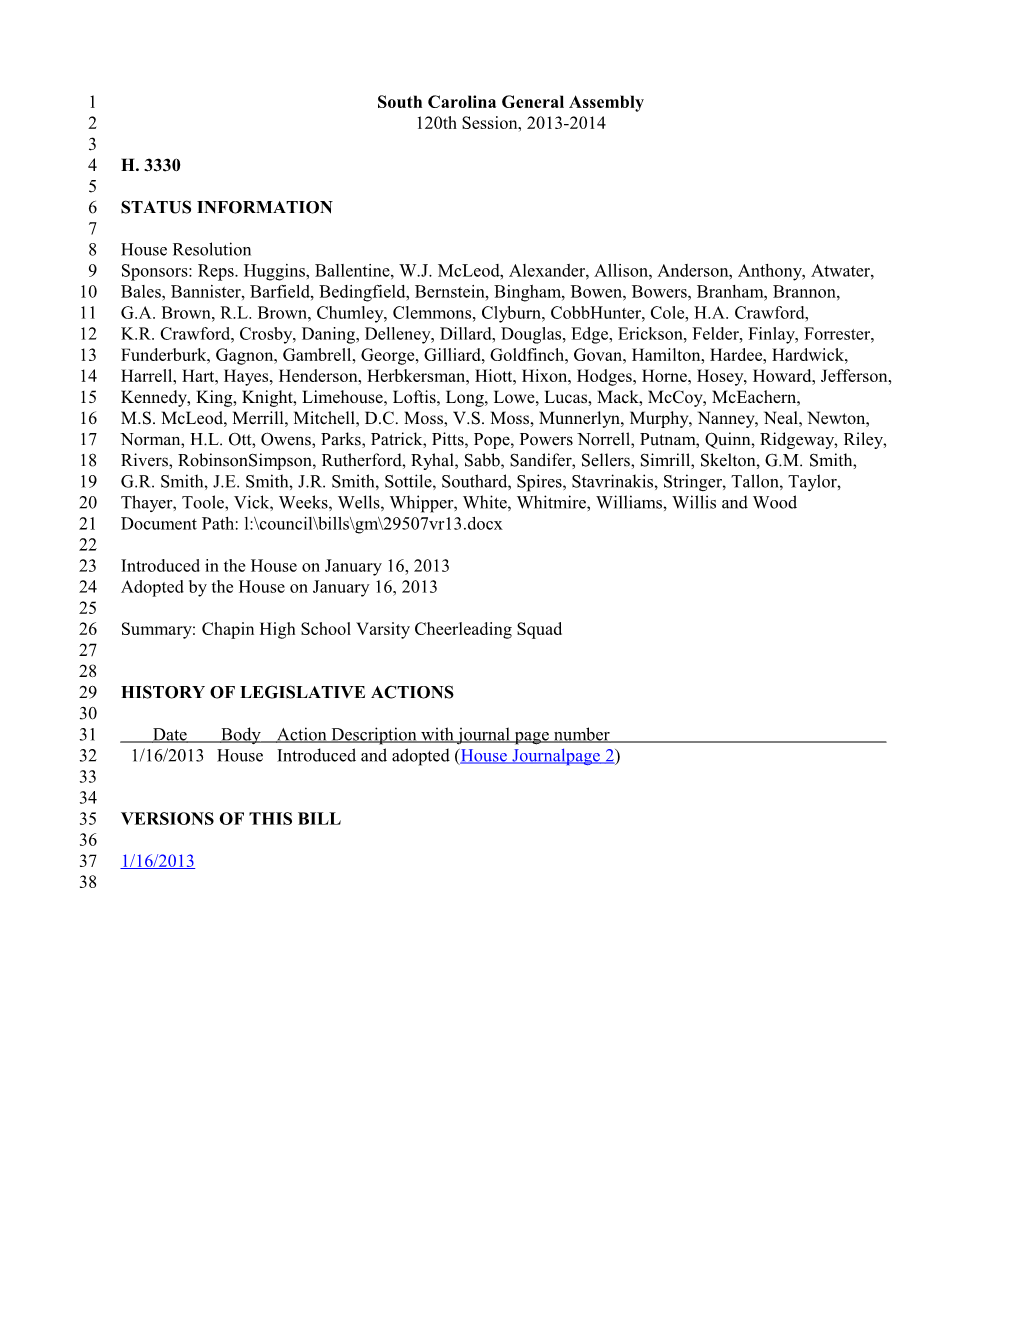 2013-2014 Bill 3330: Chapin High School Varsity Cheerleading Squad - South Carolina Legislature